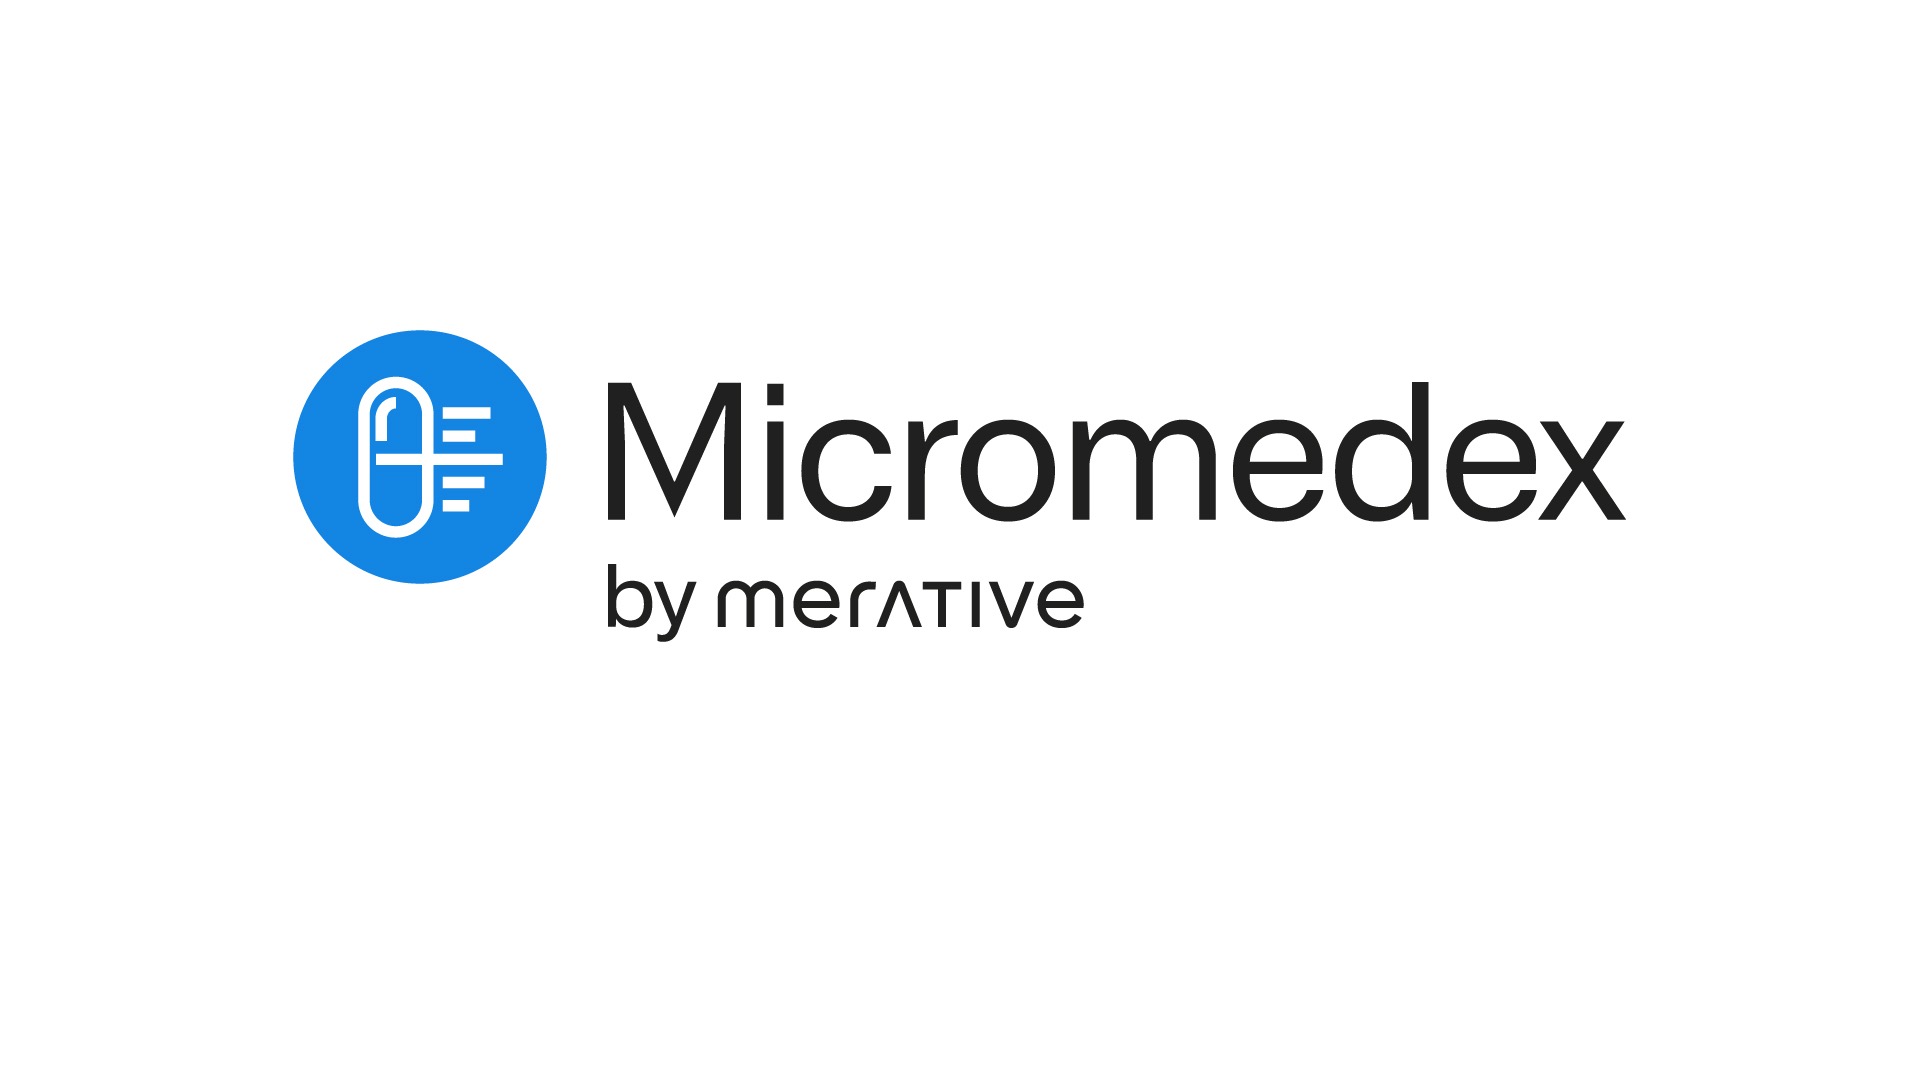 The Core Capabilities of Micromedex 79